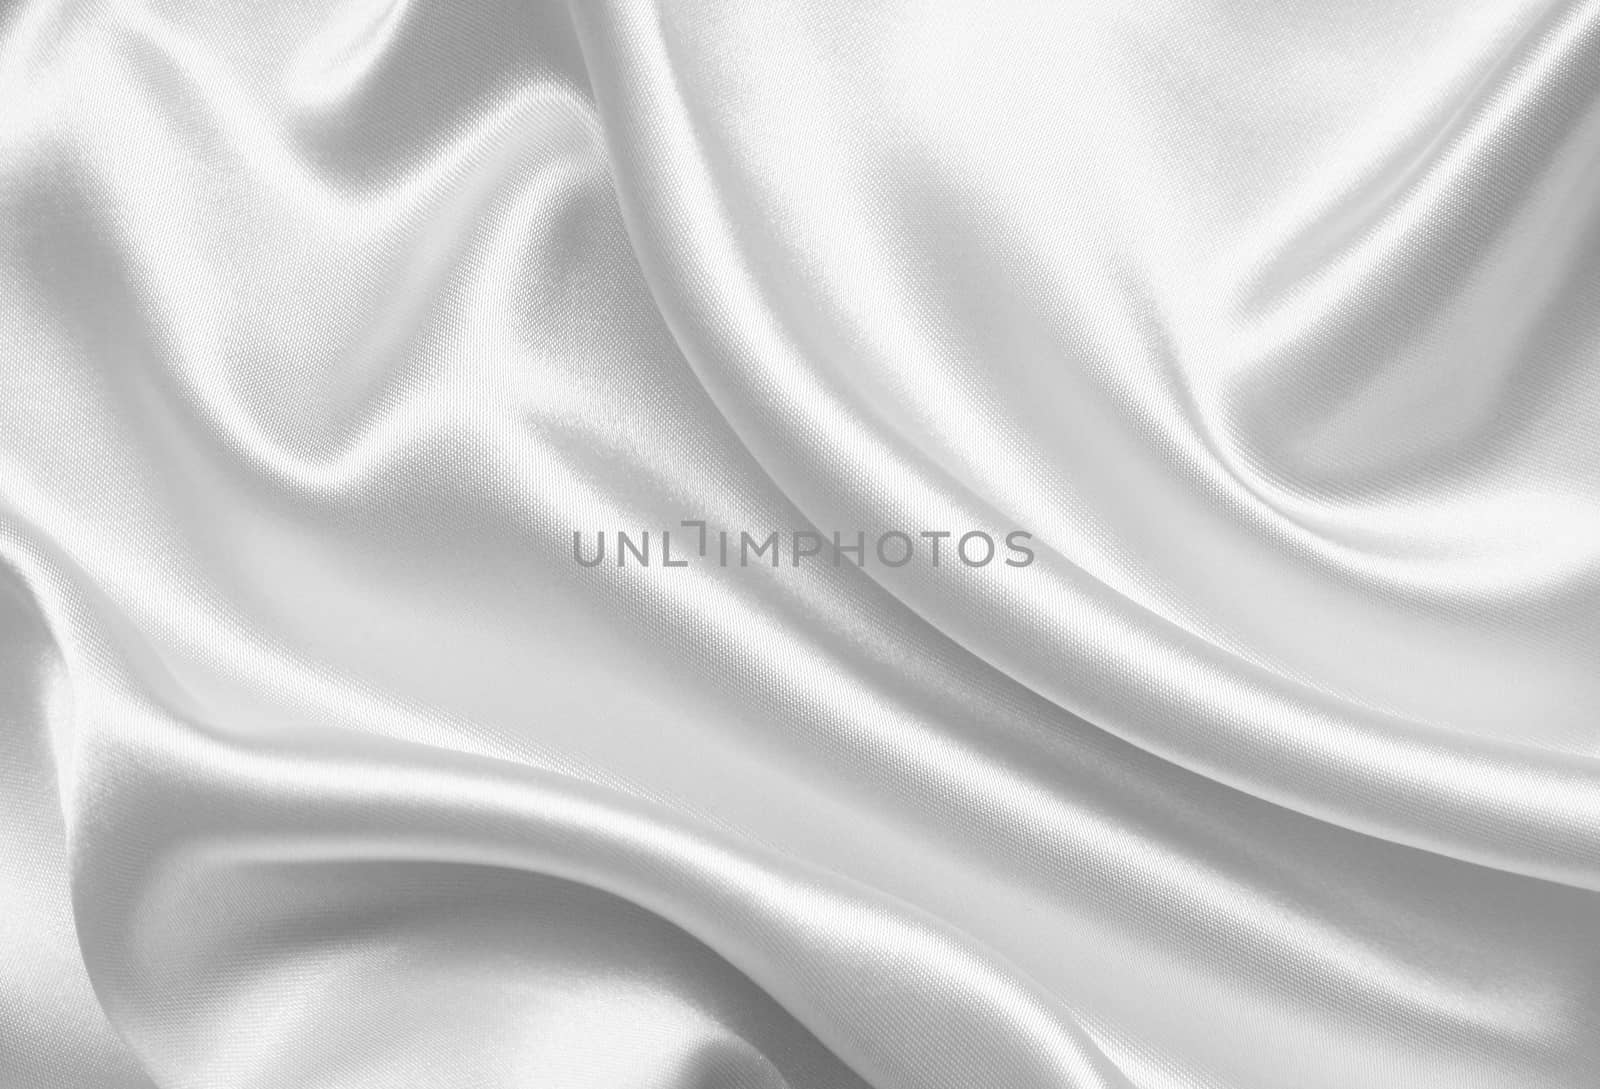 Smooth elegant white silk or satin can use as wedding background 